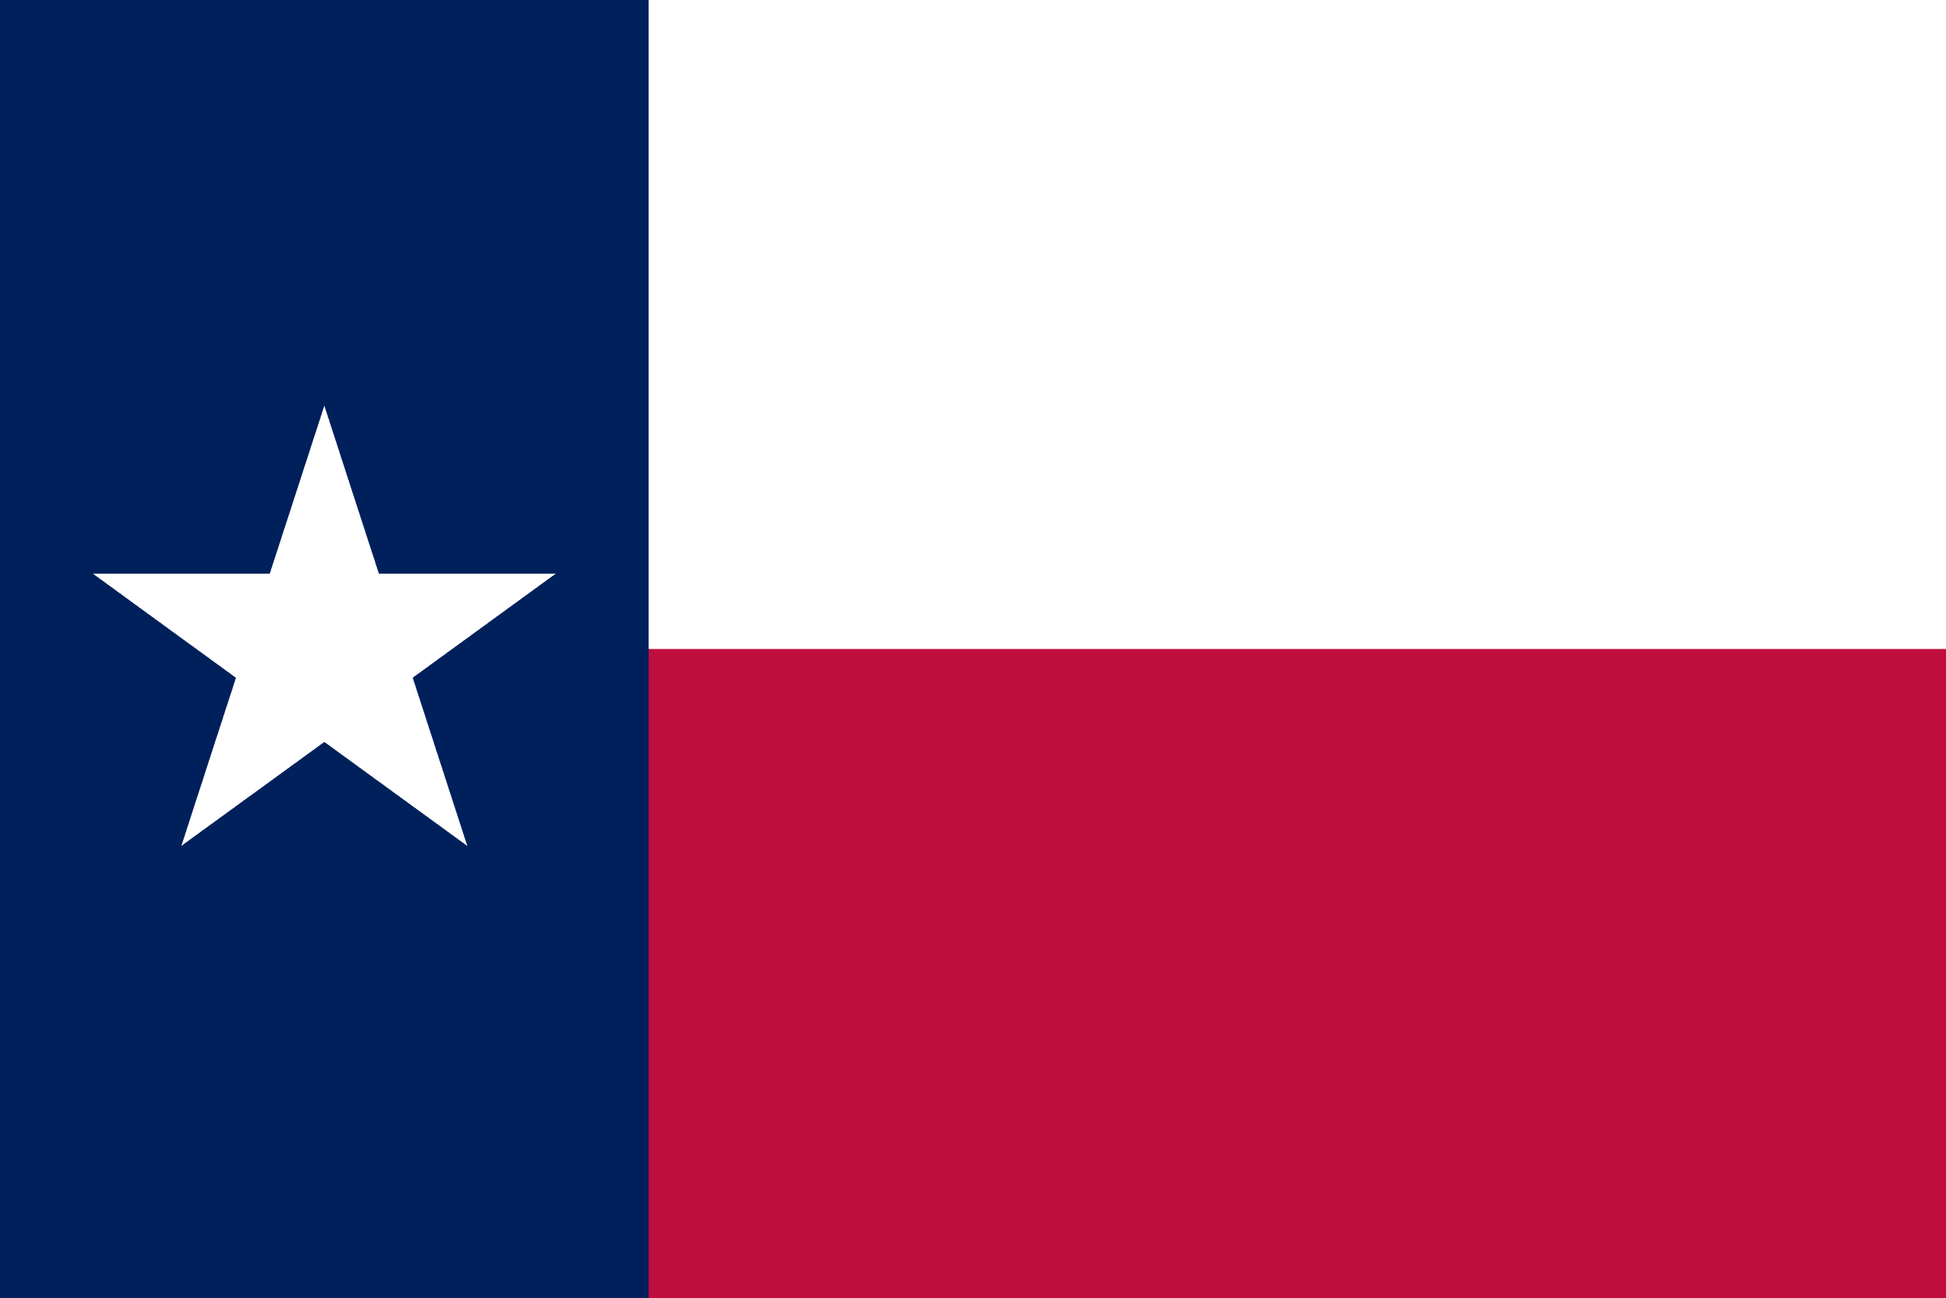 Texas State Flag - Symonds Flags